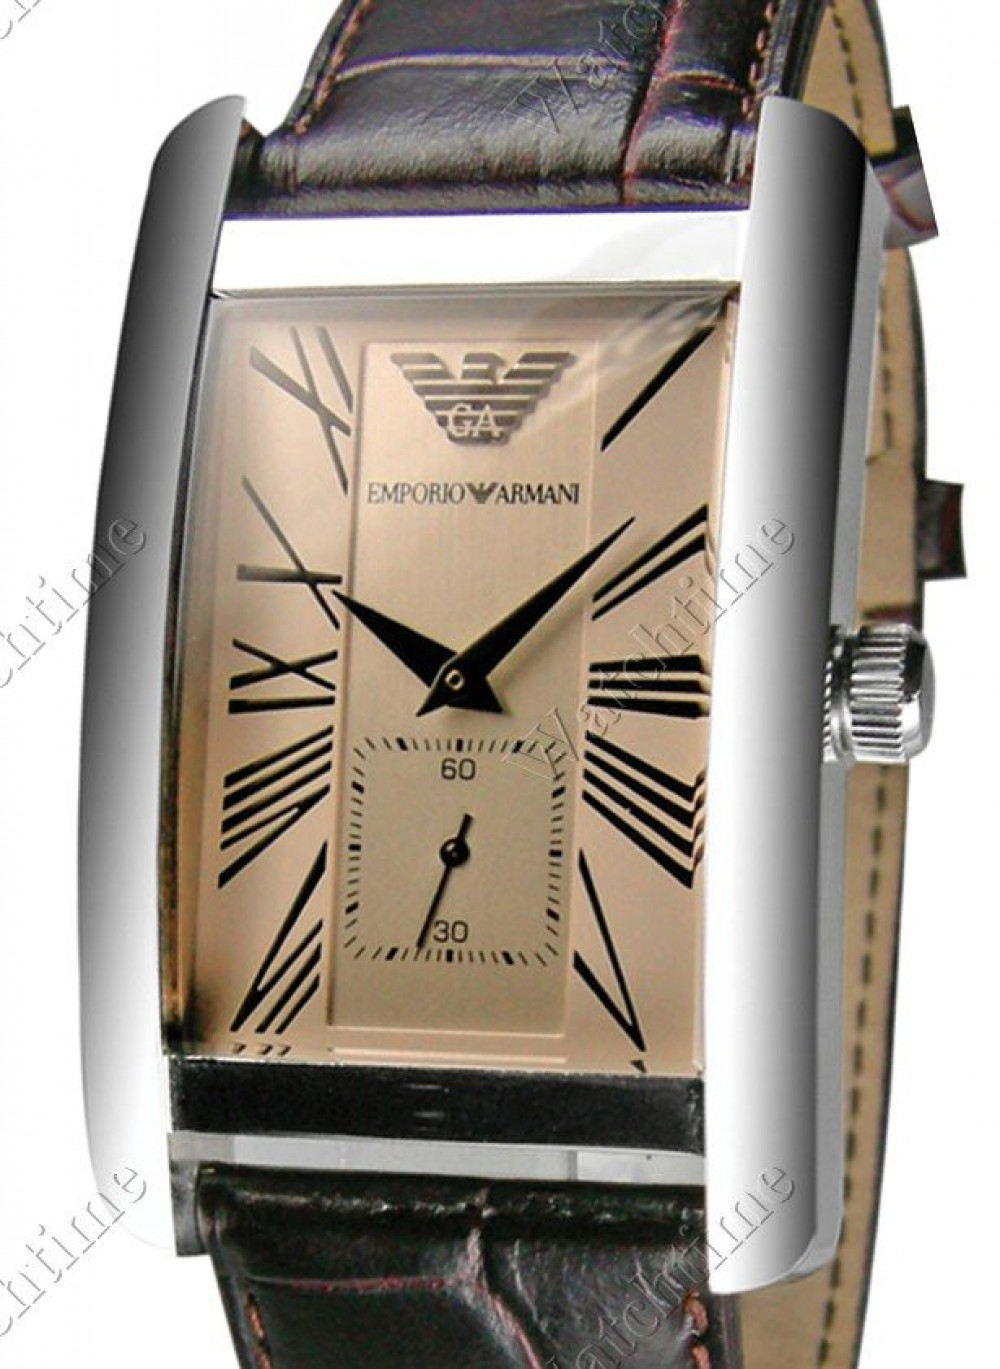 Zegarek firmy Emporio Armani, model Classic Armani